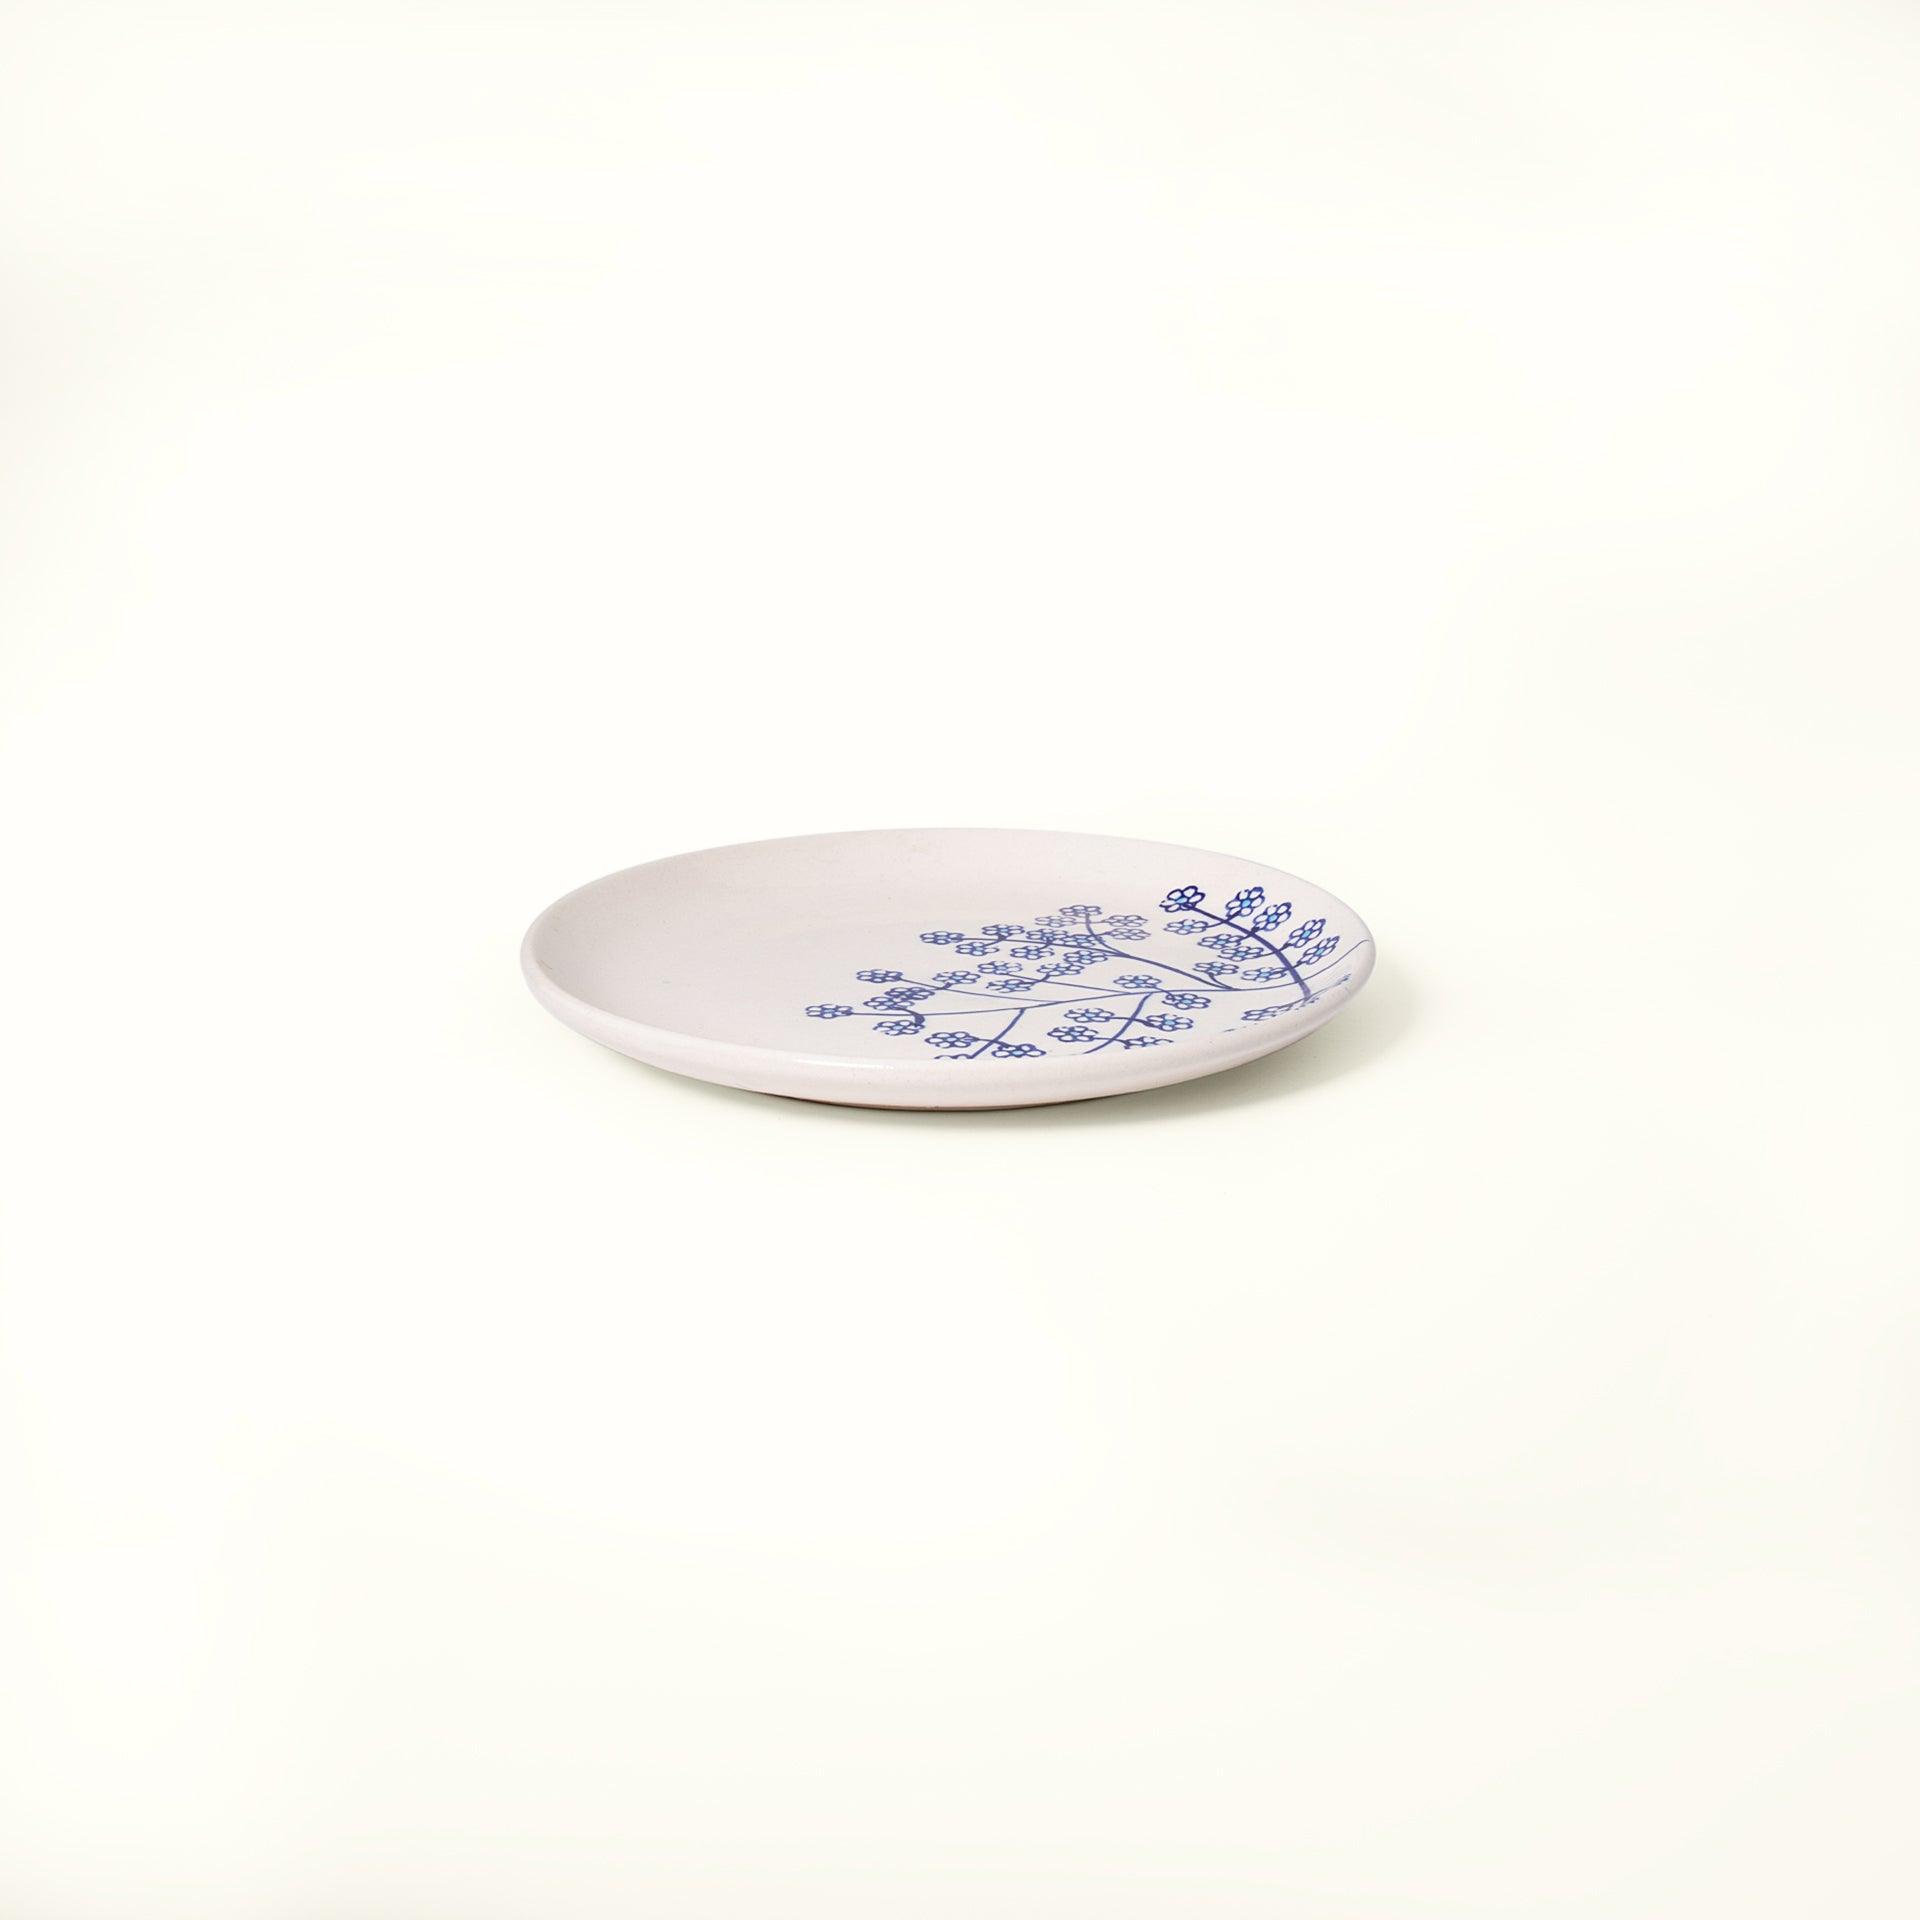 in bloom ceramic dessert plate